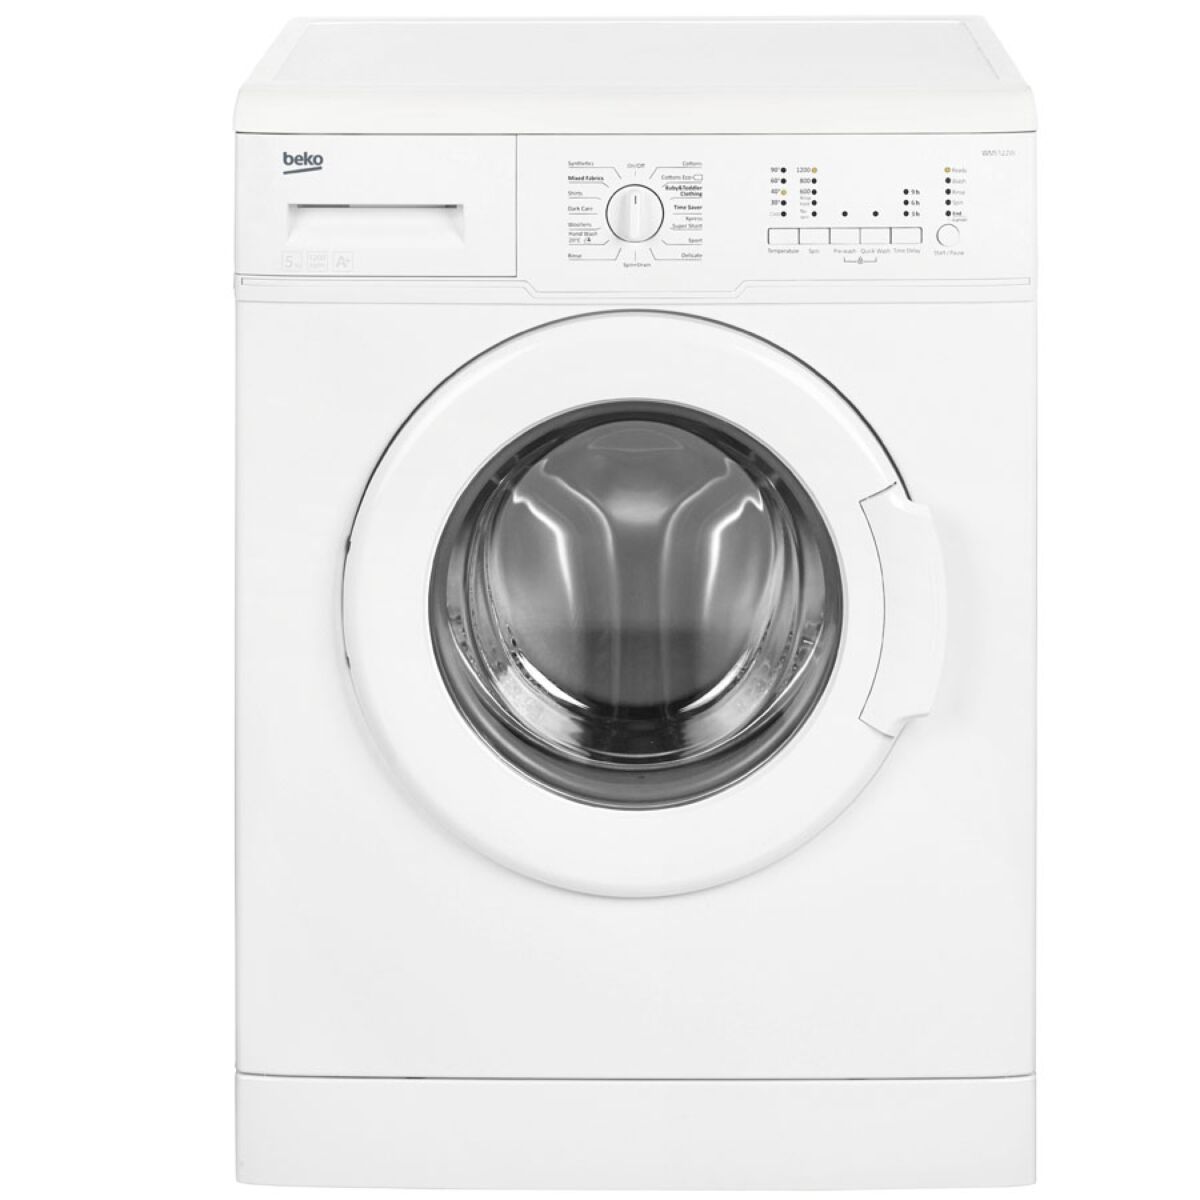 Beko WM5122W washing machine door lock